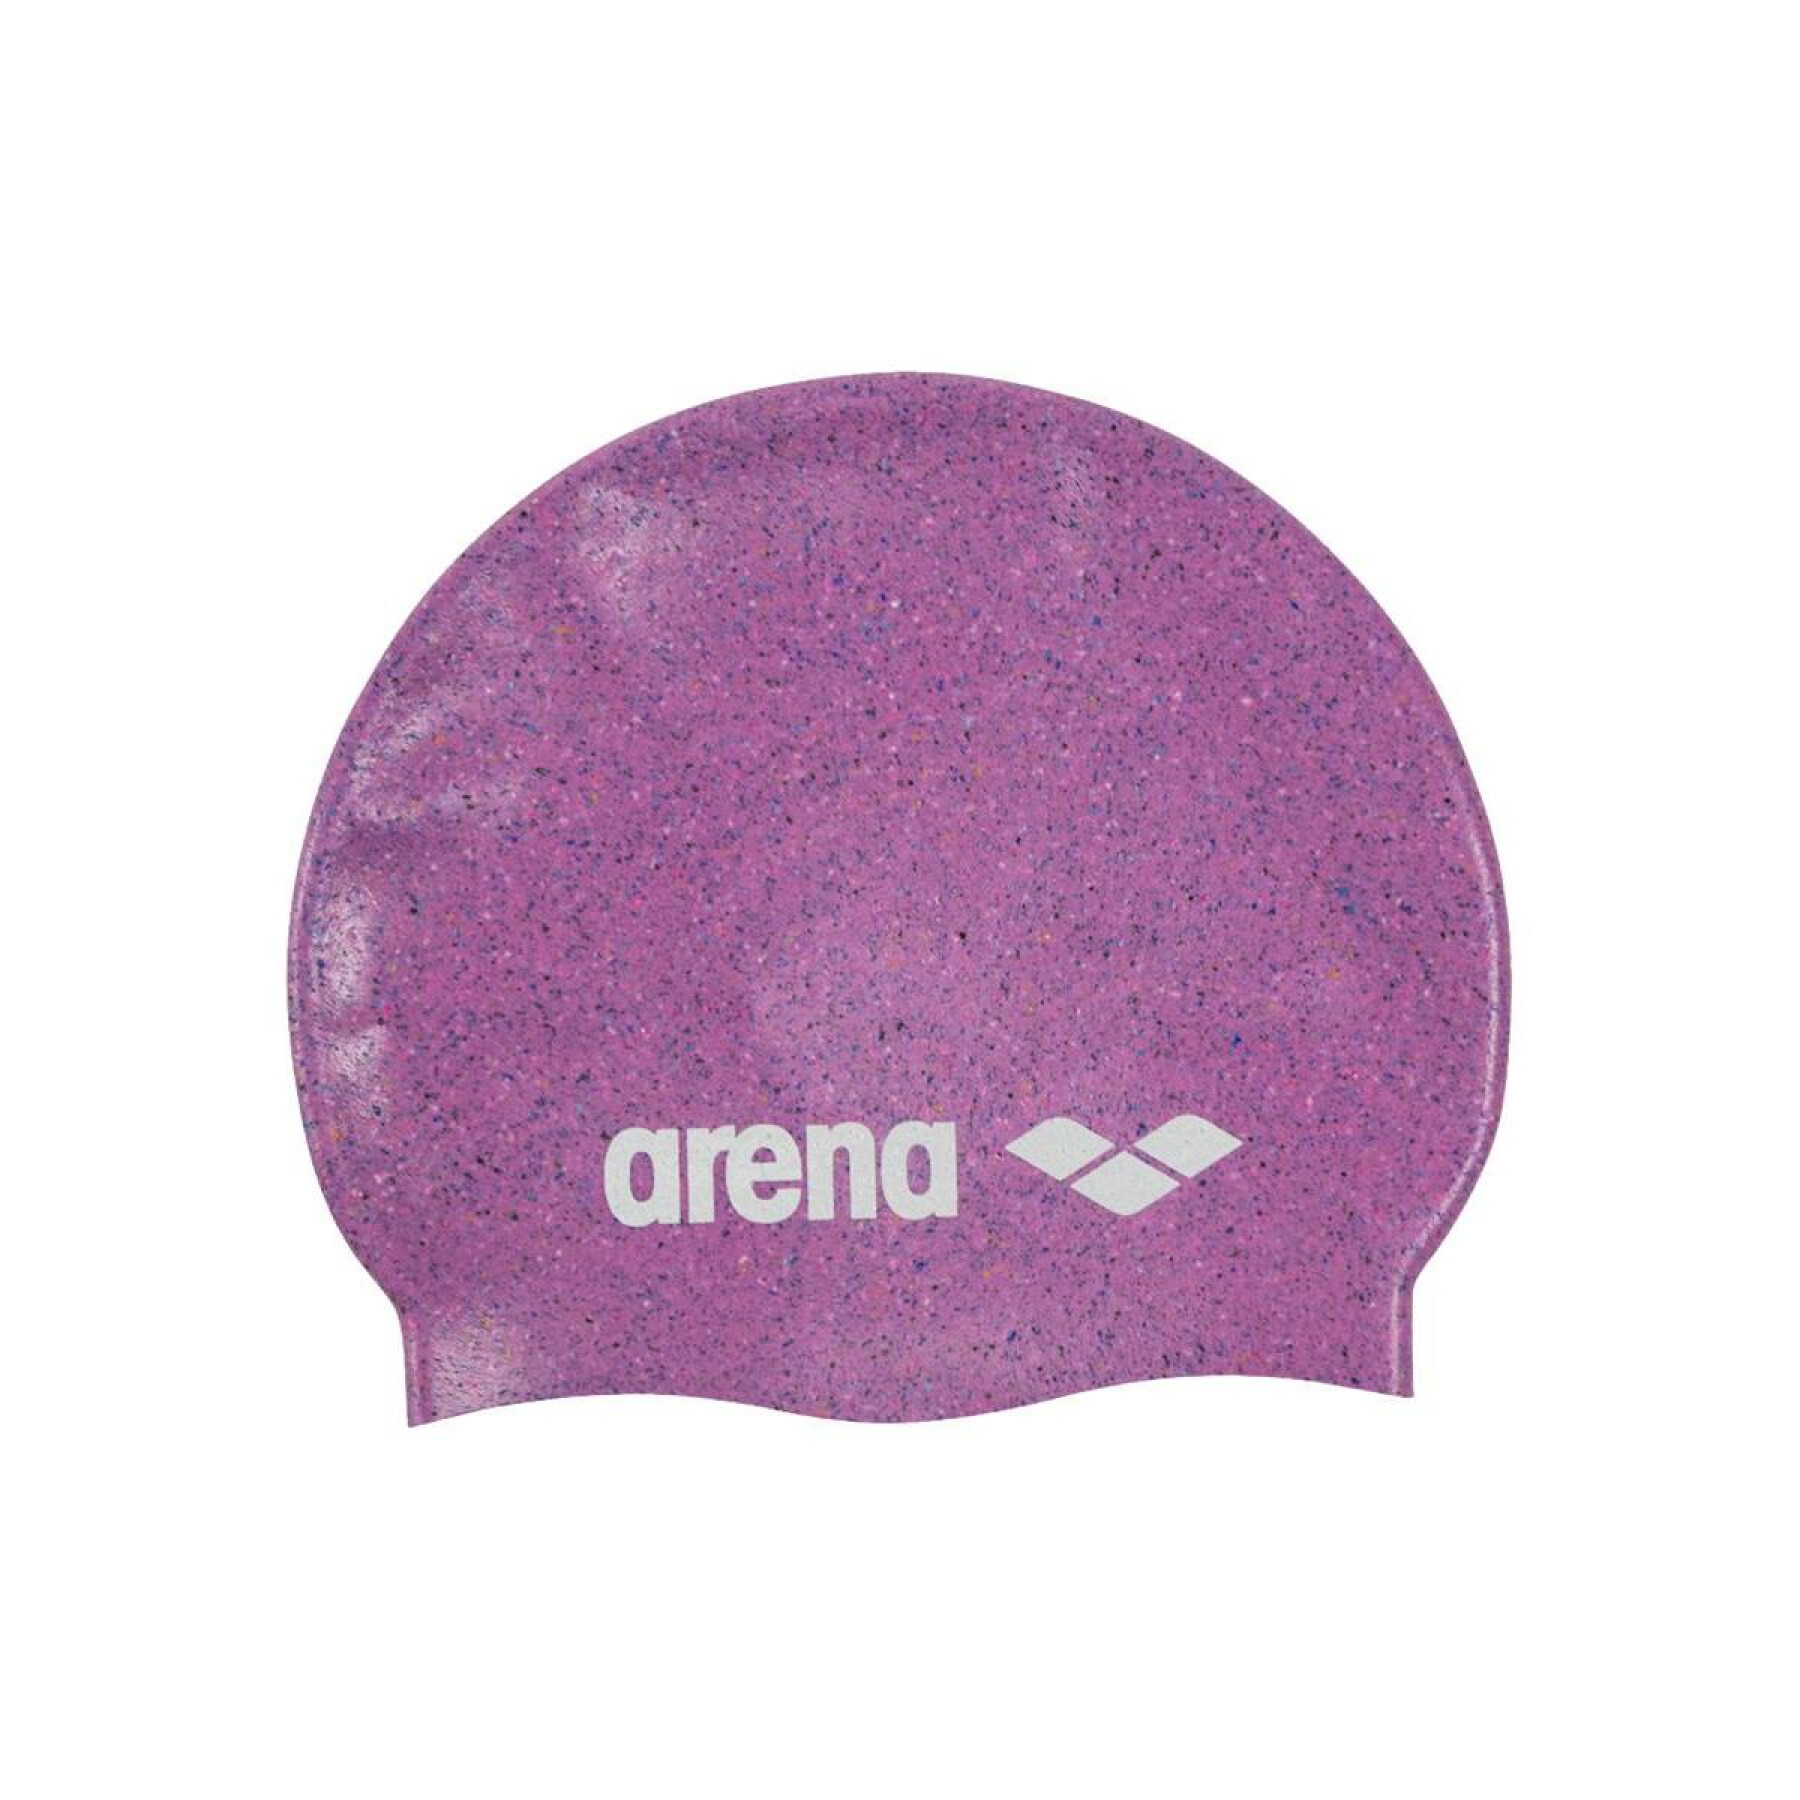 Silicone bathing cap for children Arena